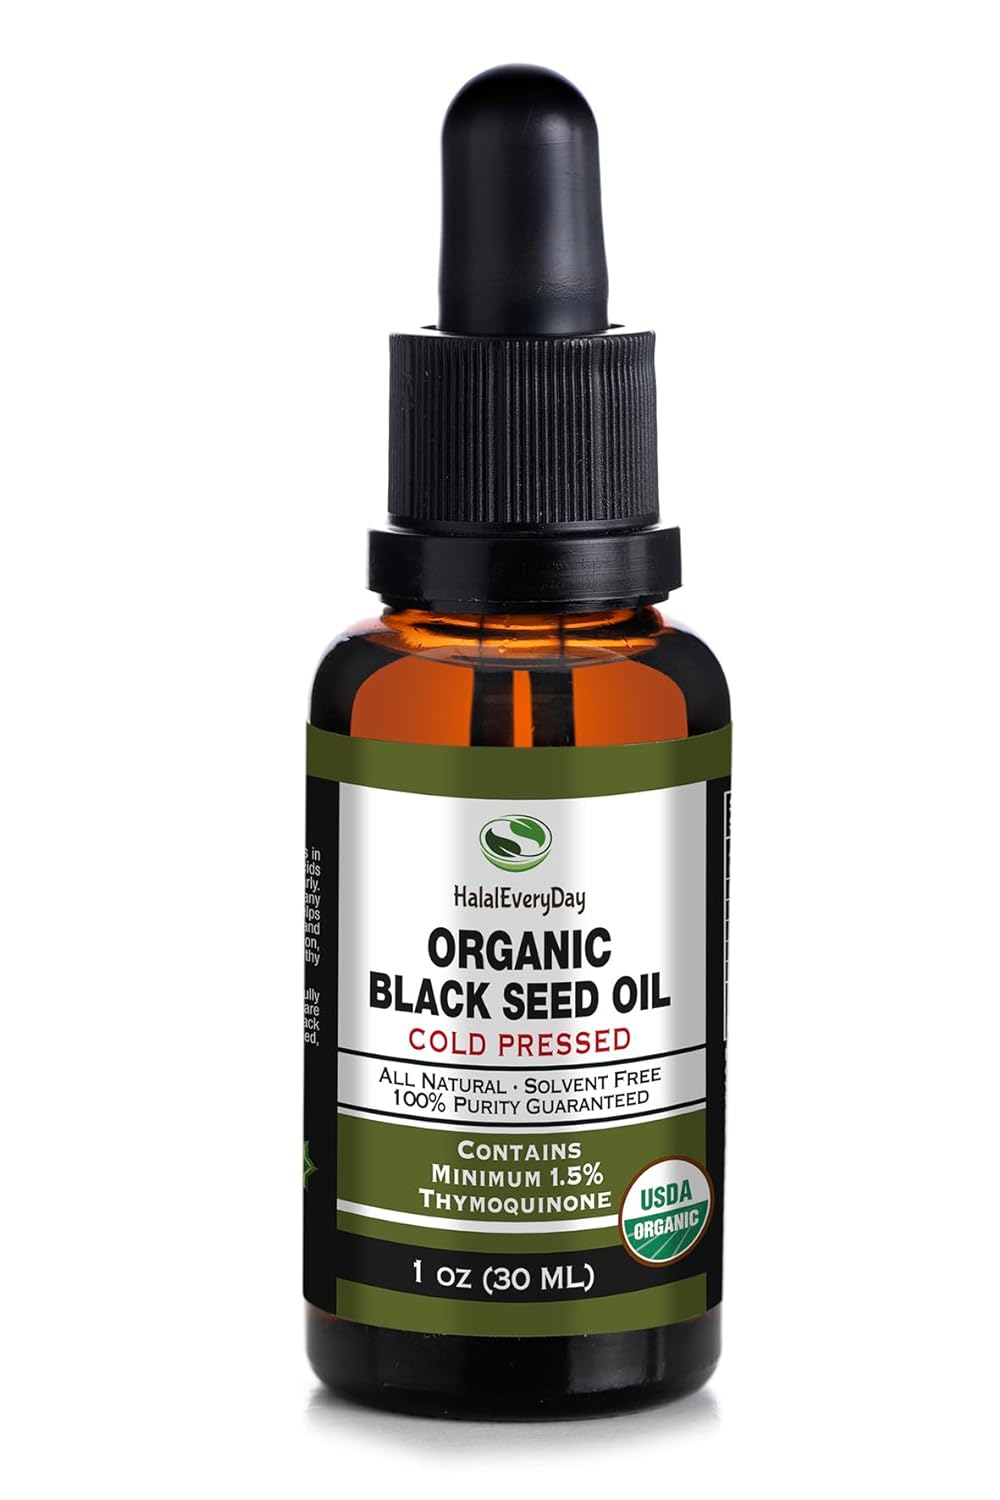 Organic Black Seed Oil - USDA Certified Cold Pressed Glass Bottle Over 1.5% Thymoquinone 3X Strength Turkish Black Cumin Nigella Sativa Non-GMO 100% Pure Blackseed Oil (1oz Dropper Bottle)